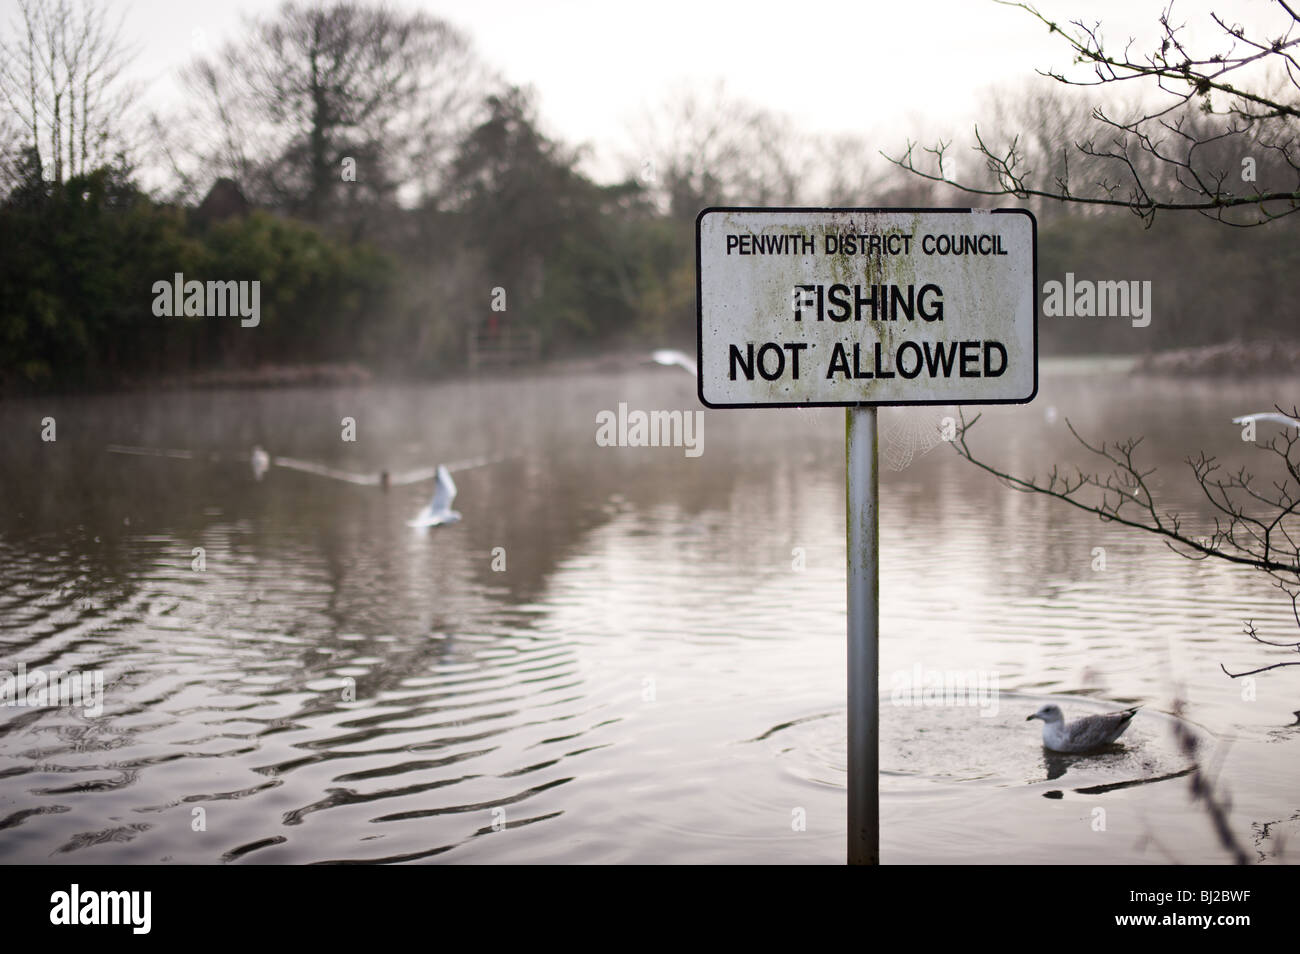 No fishing sign at a pond, Hayle, Cornwall Stock Photo